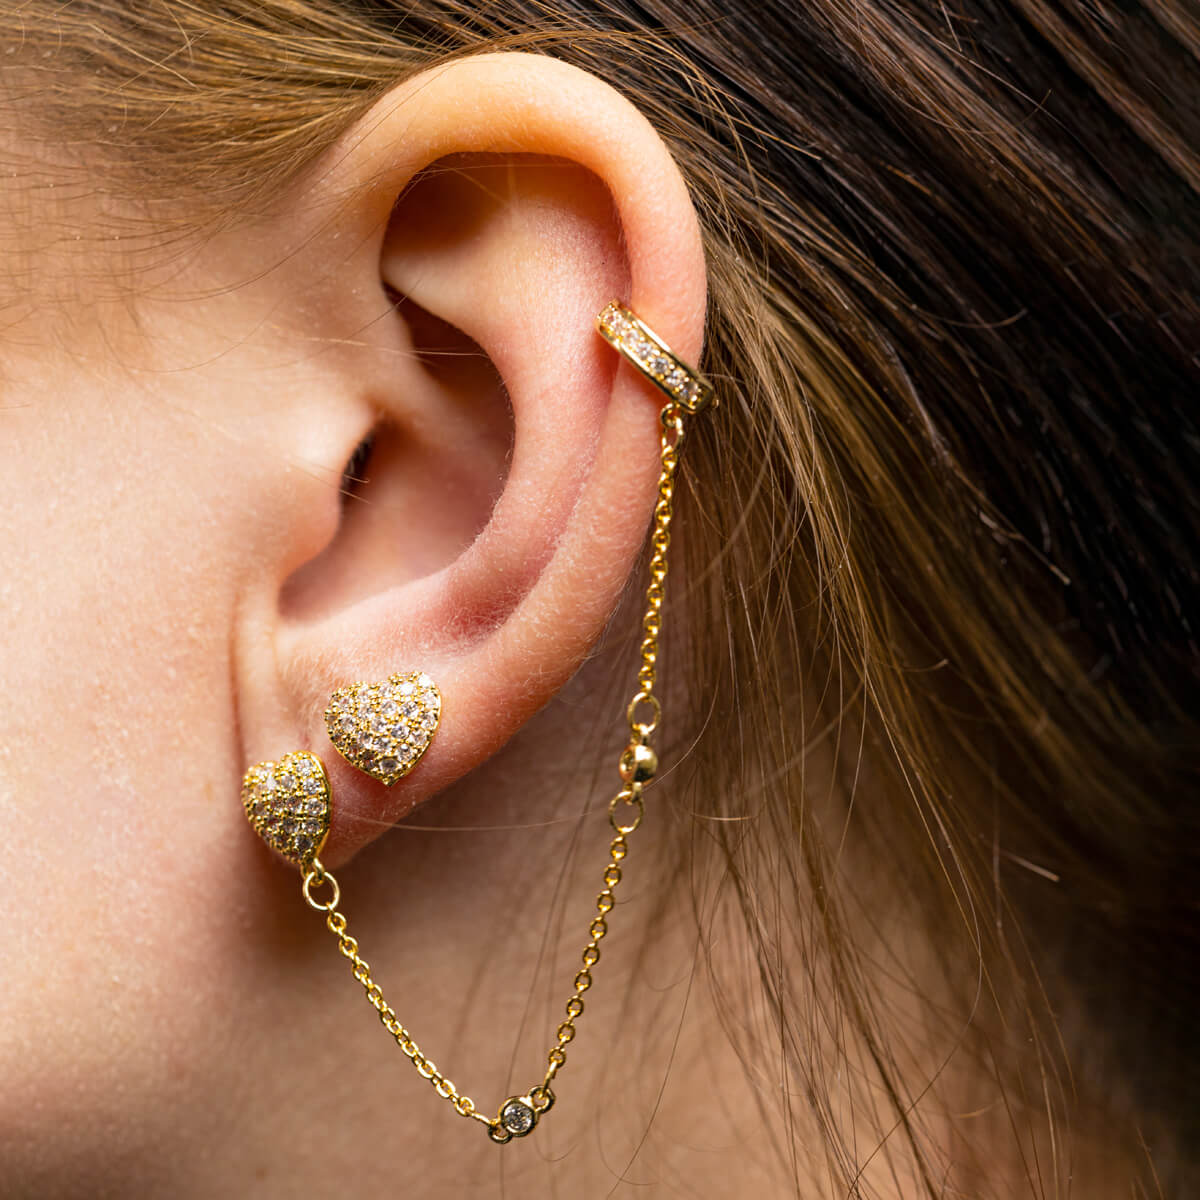 Zirconia heart chain with rustic earring ear cuff 1pc